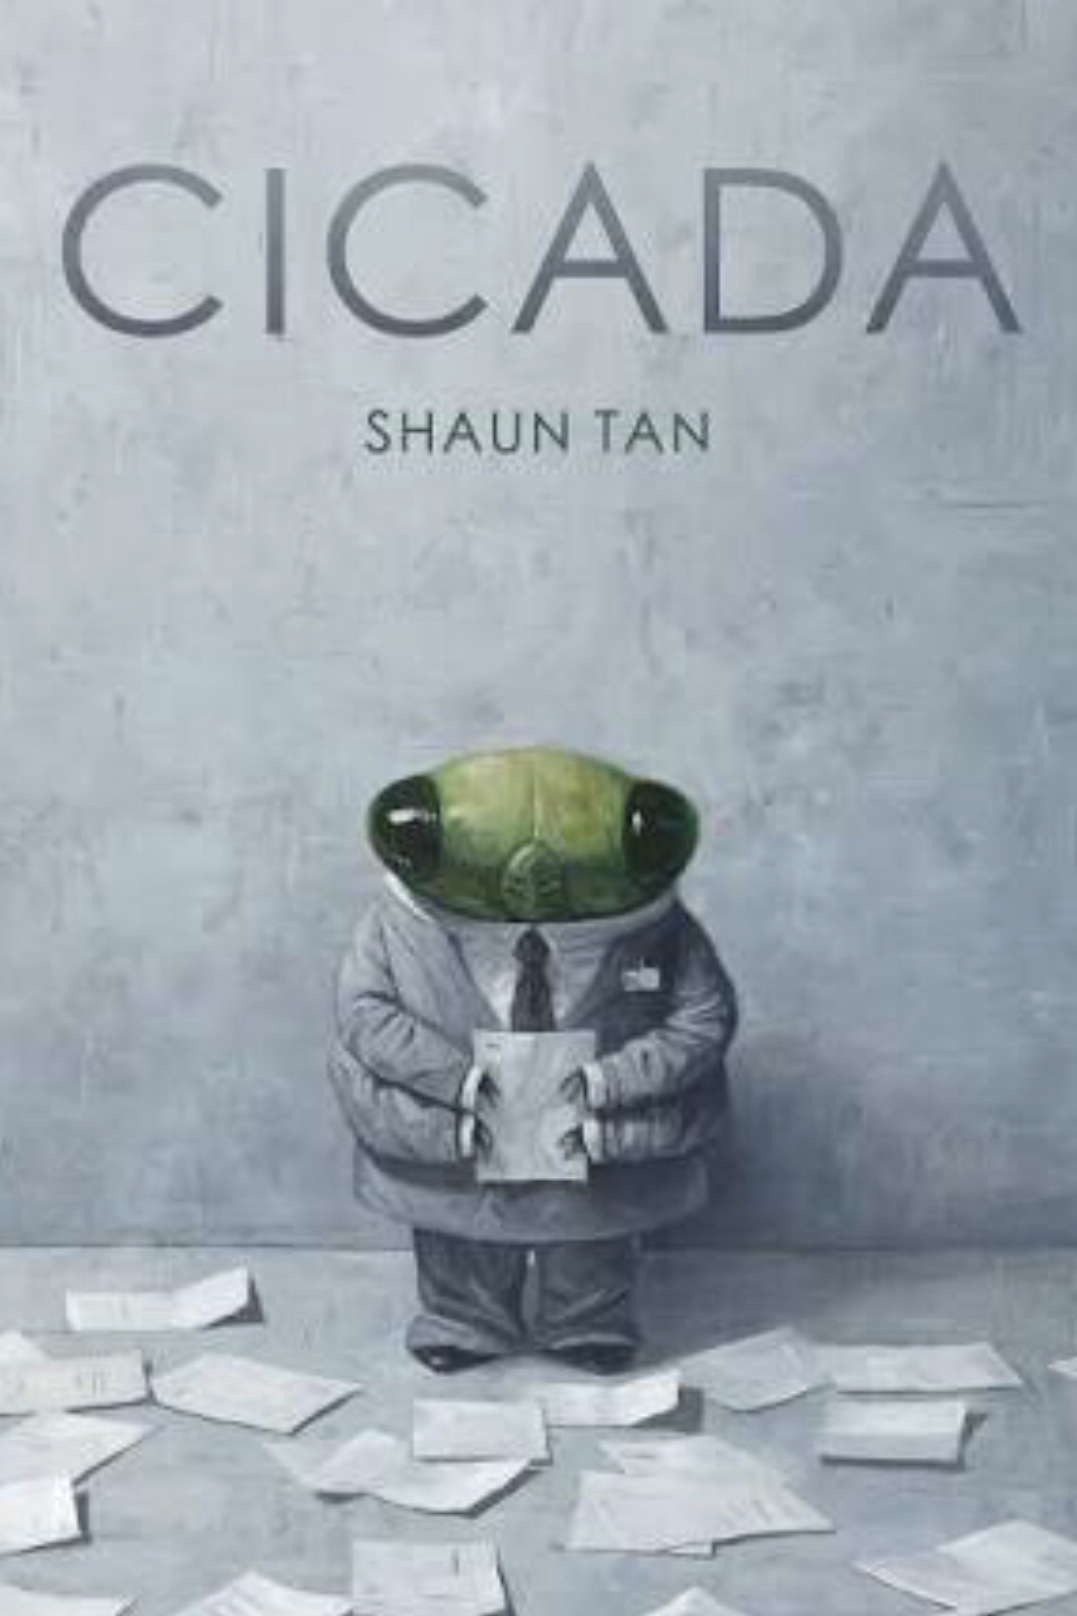 Review | Cicada by Shaun Tan